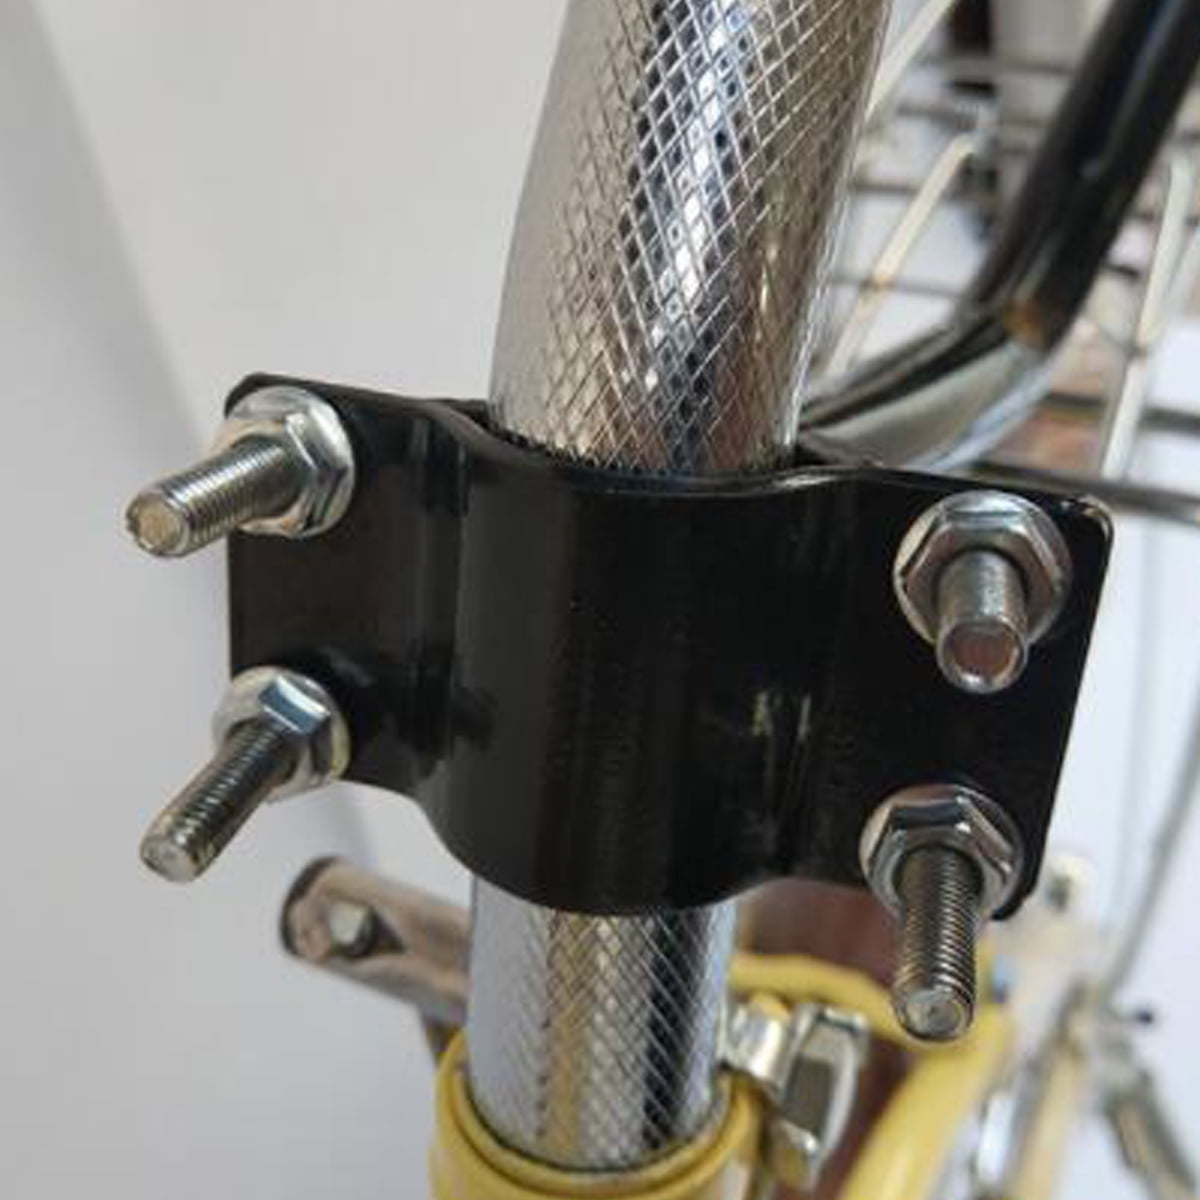 bicycle push handle